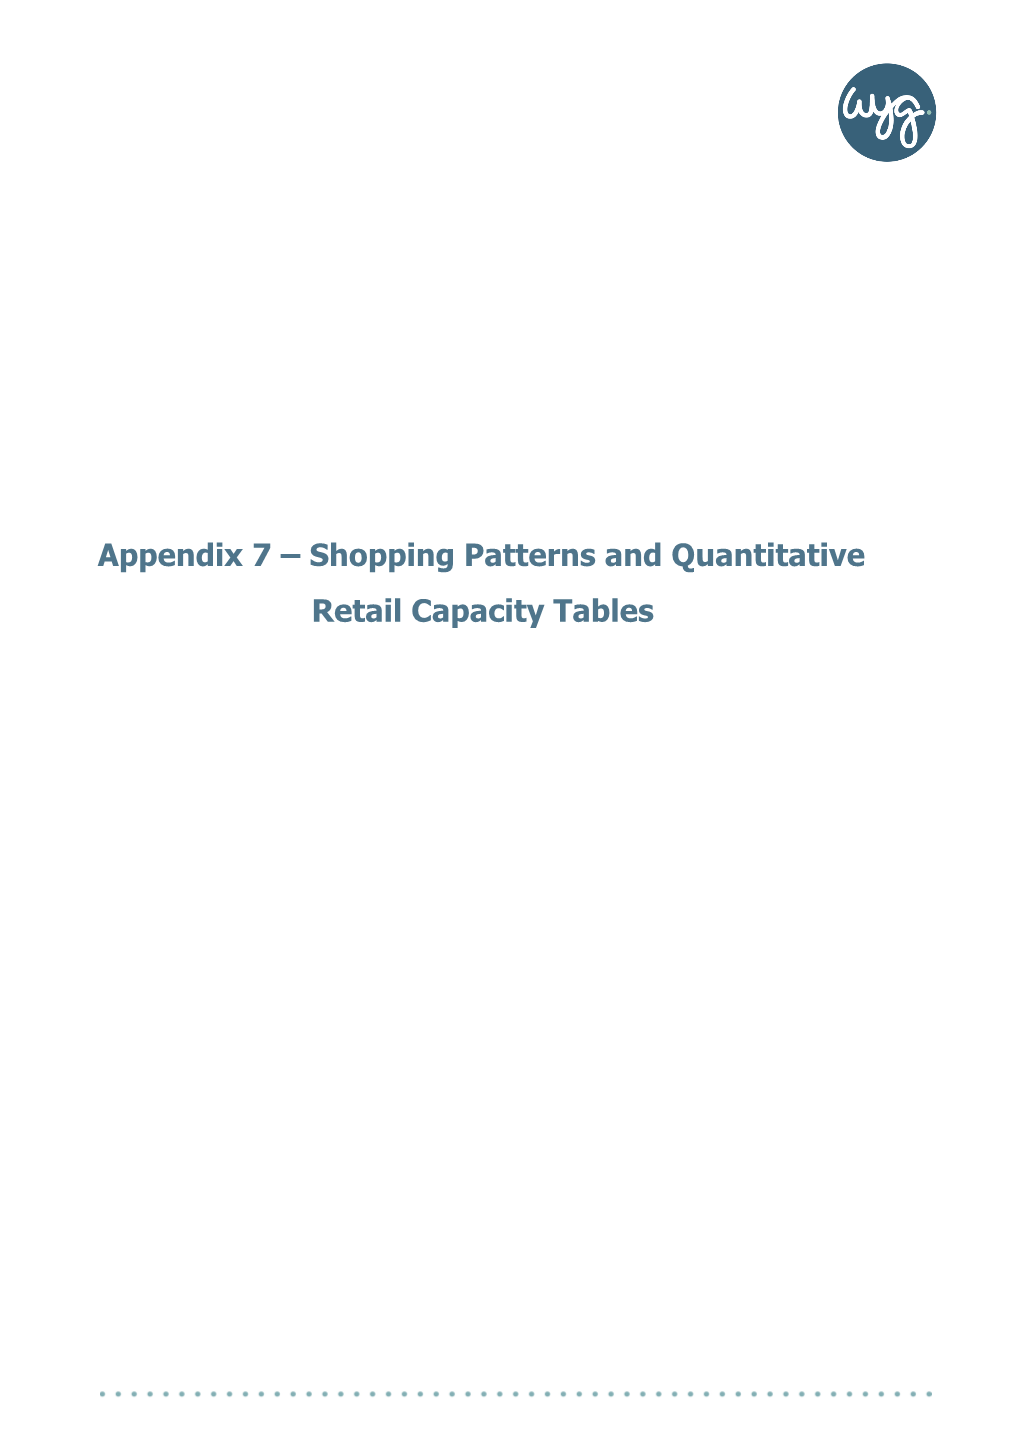 Appendix 7 – Shopping Patterns and Quantitative Retail Capacity Tables